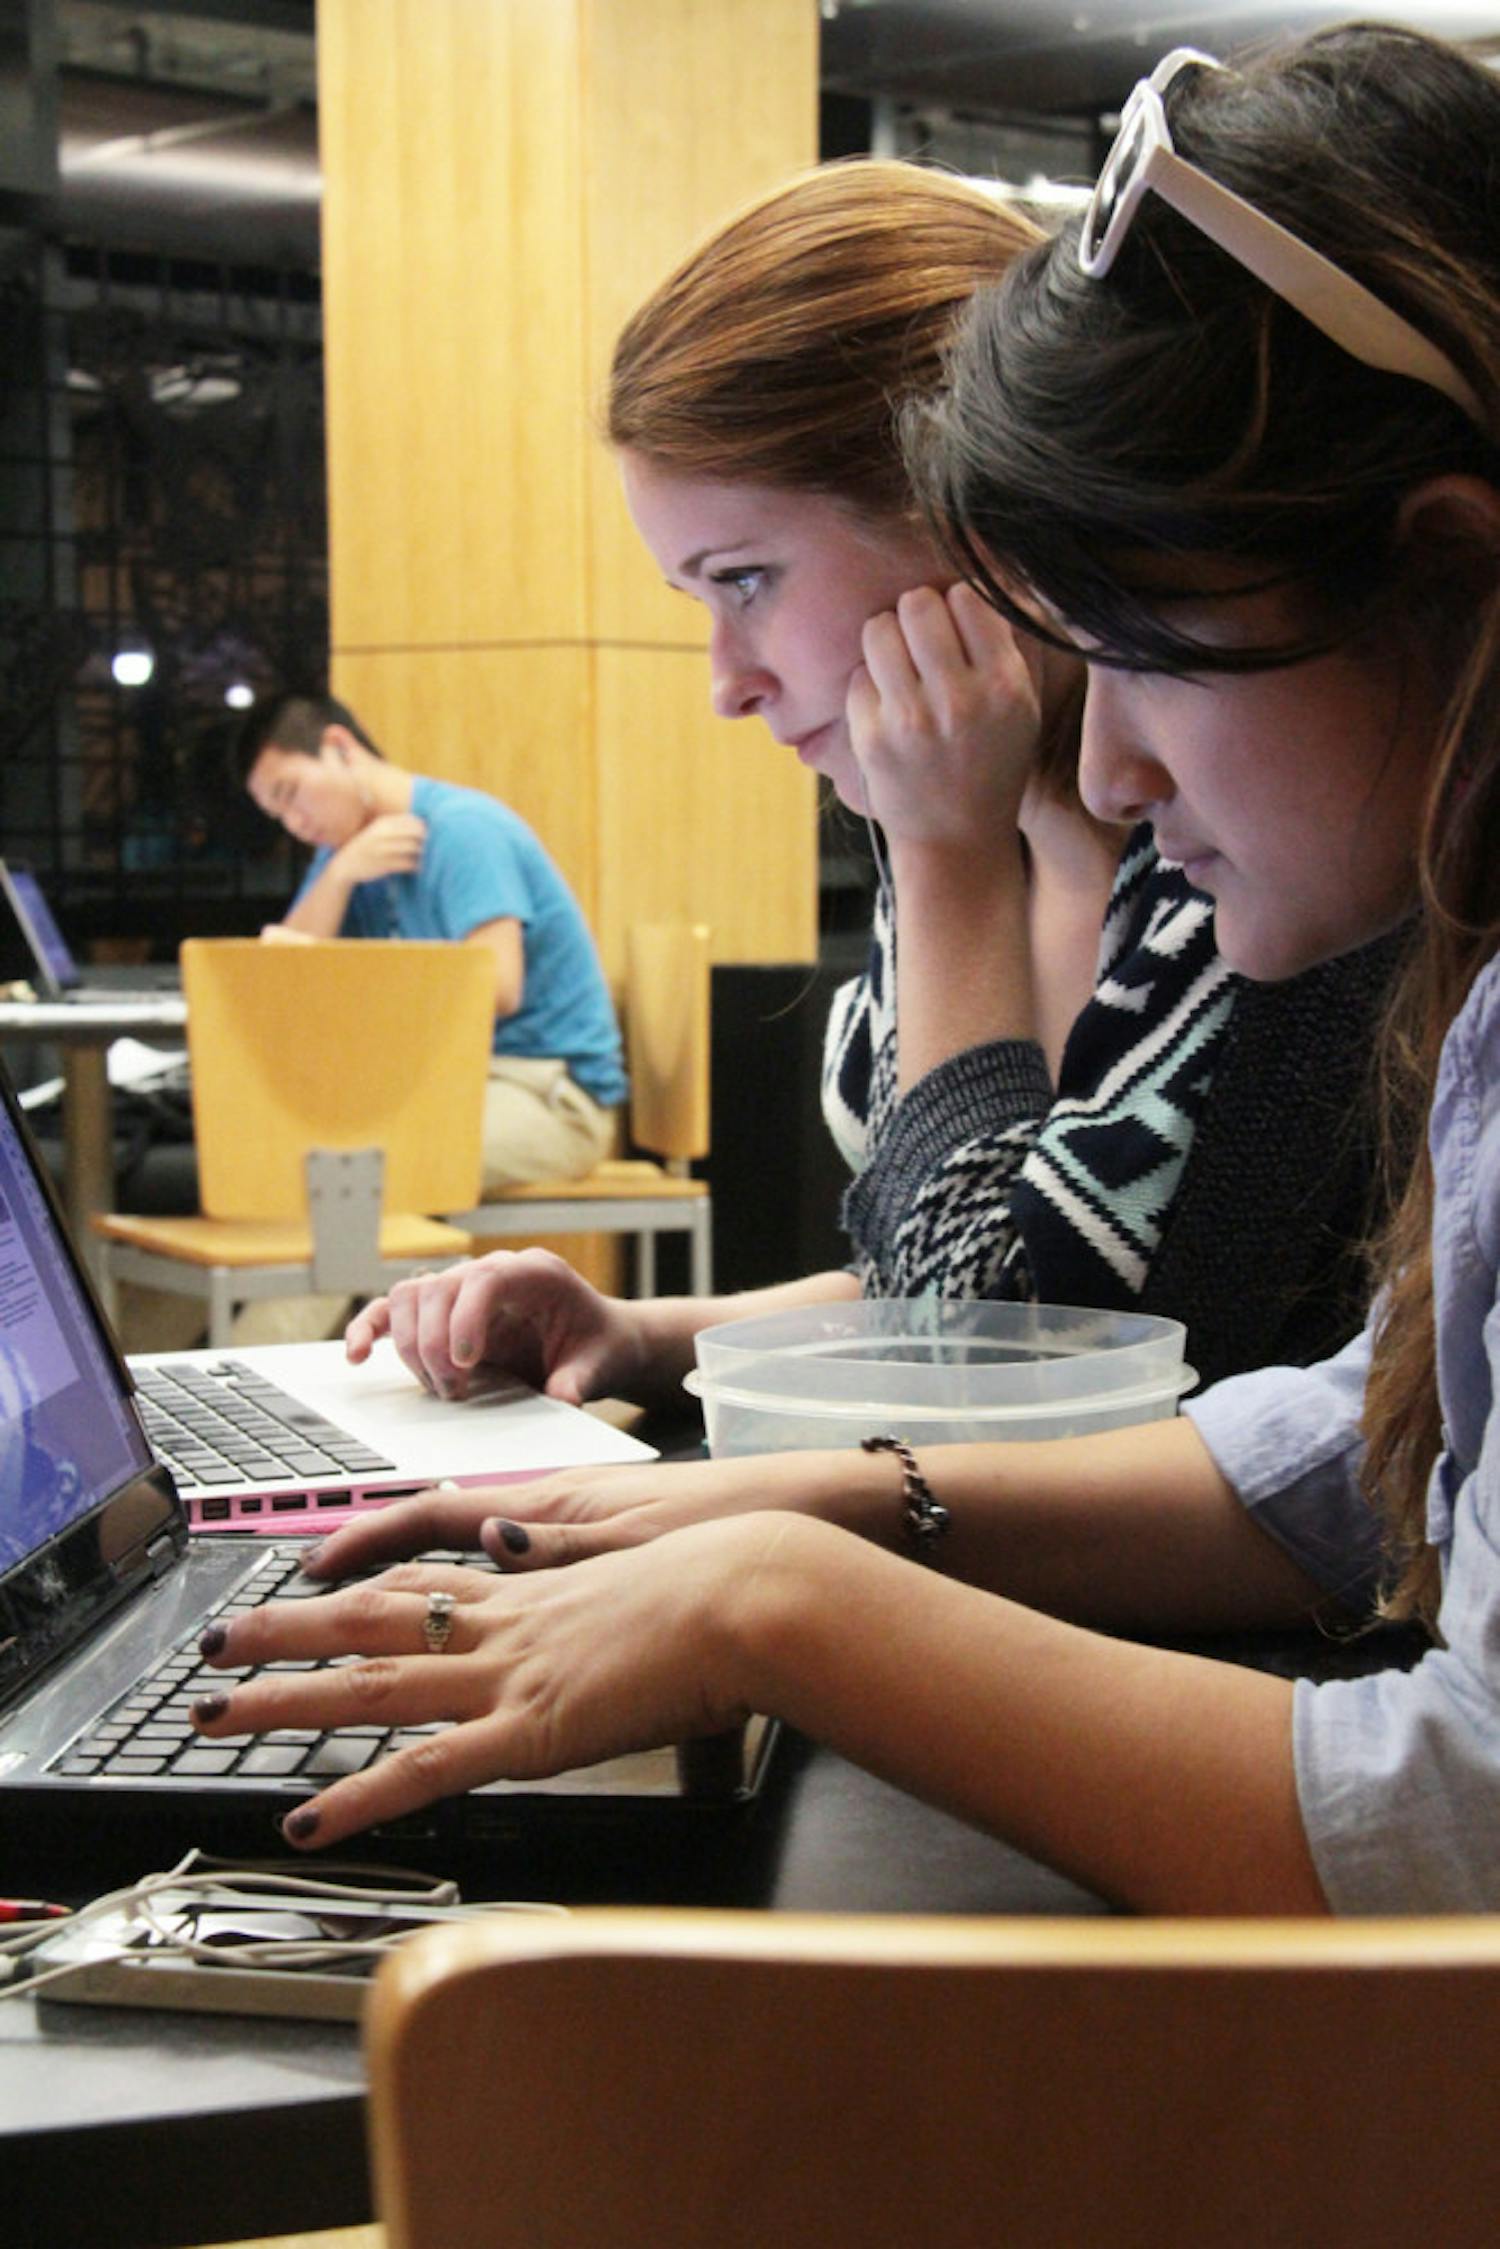 UF advertising juniors Katy Whitehurst, 20, and Ria Burgos, 20, study at Library West on Sunday night.